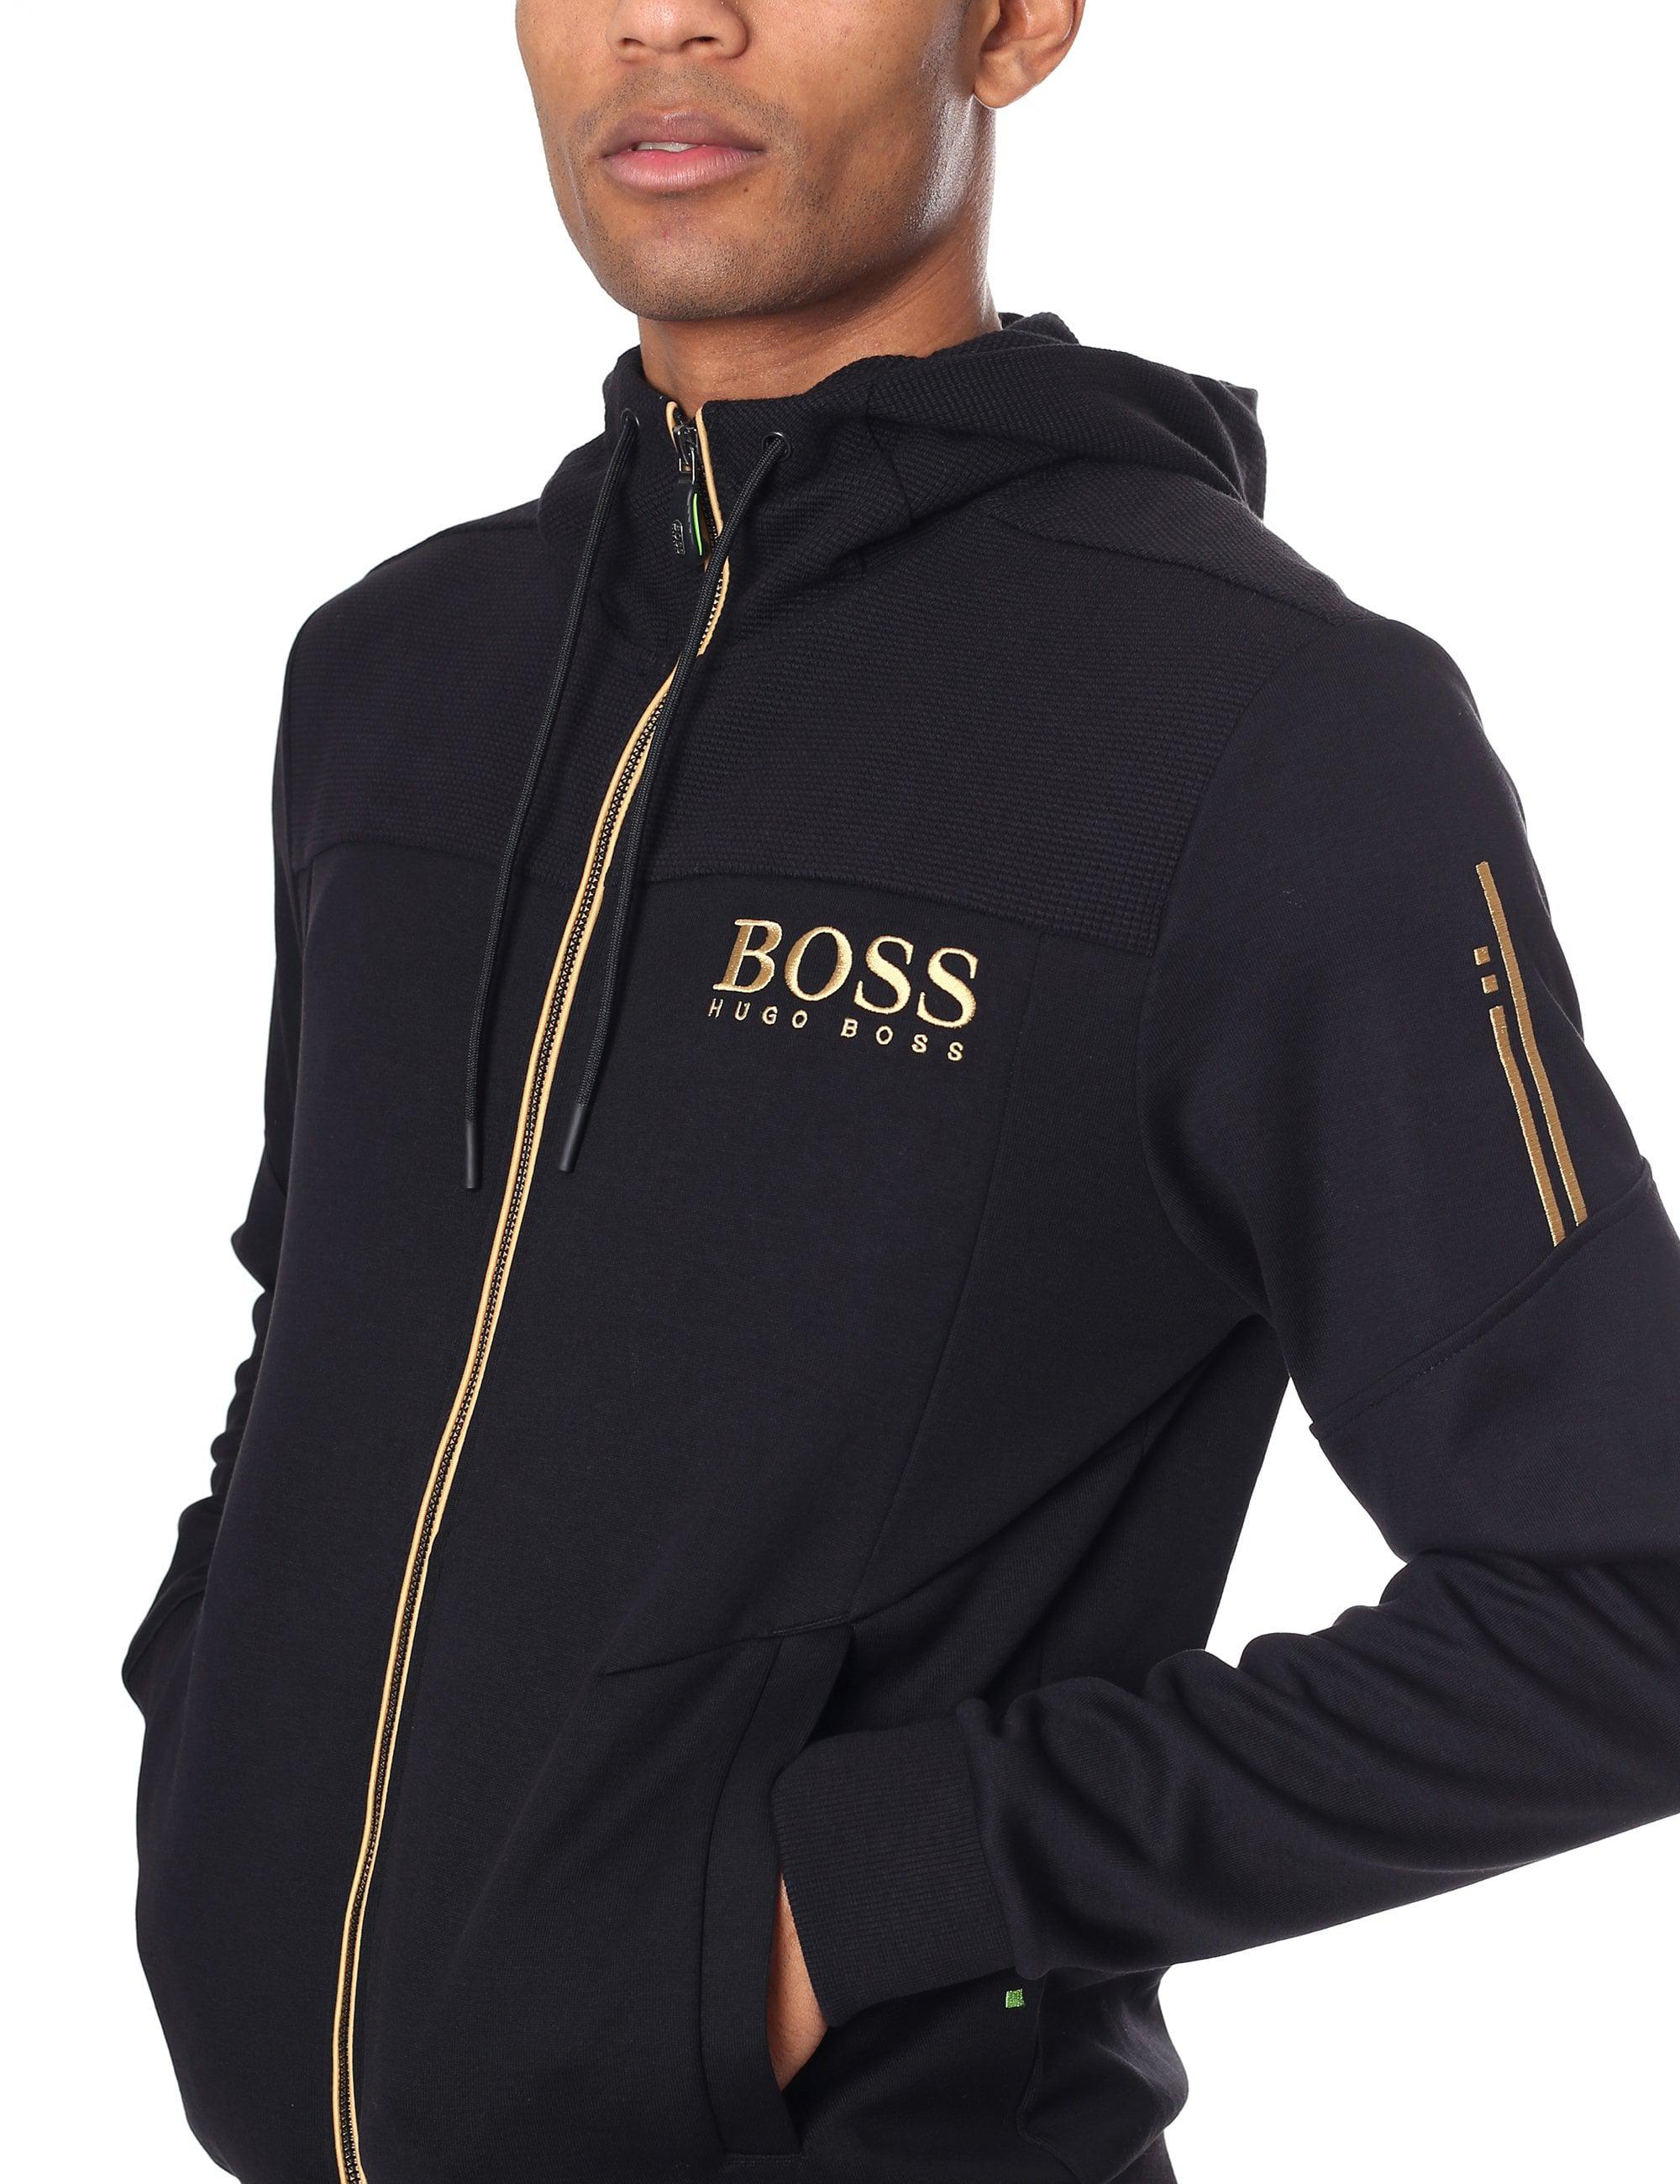 boss hugo boss full zip hoodie black